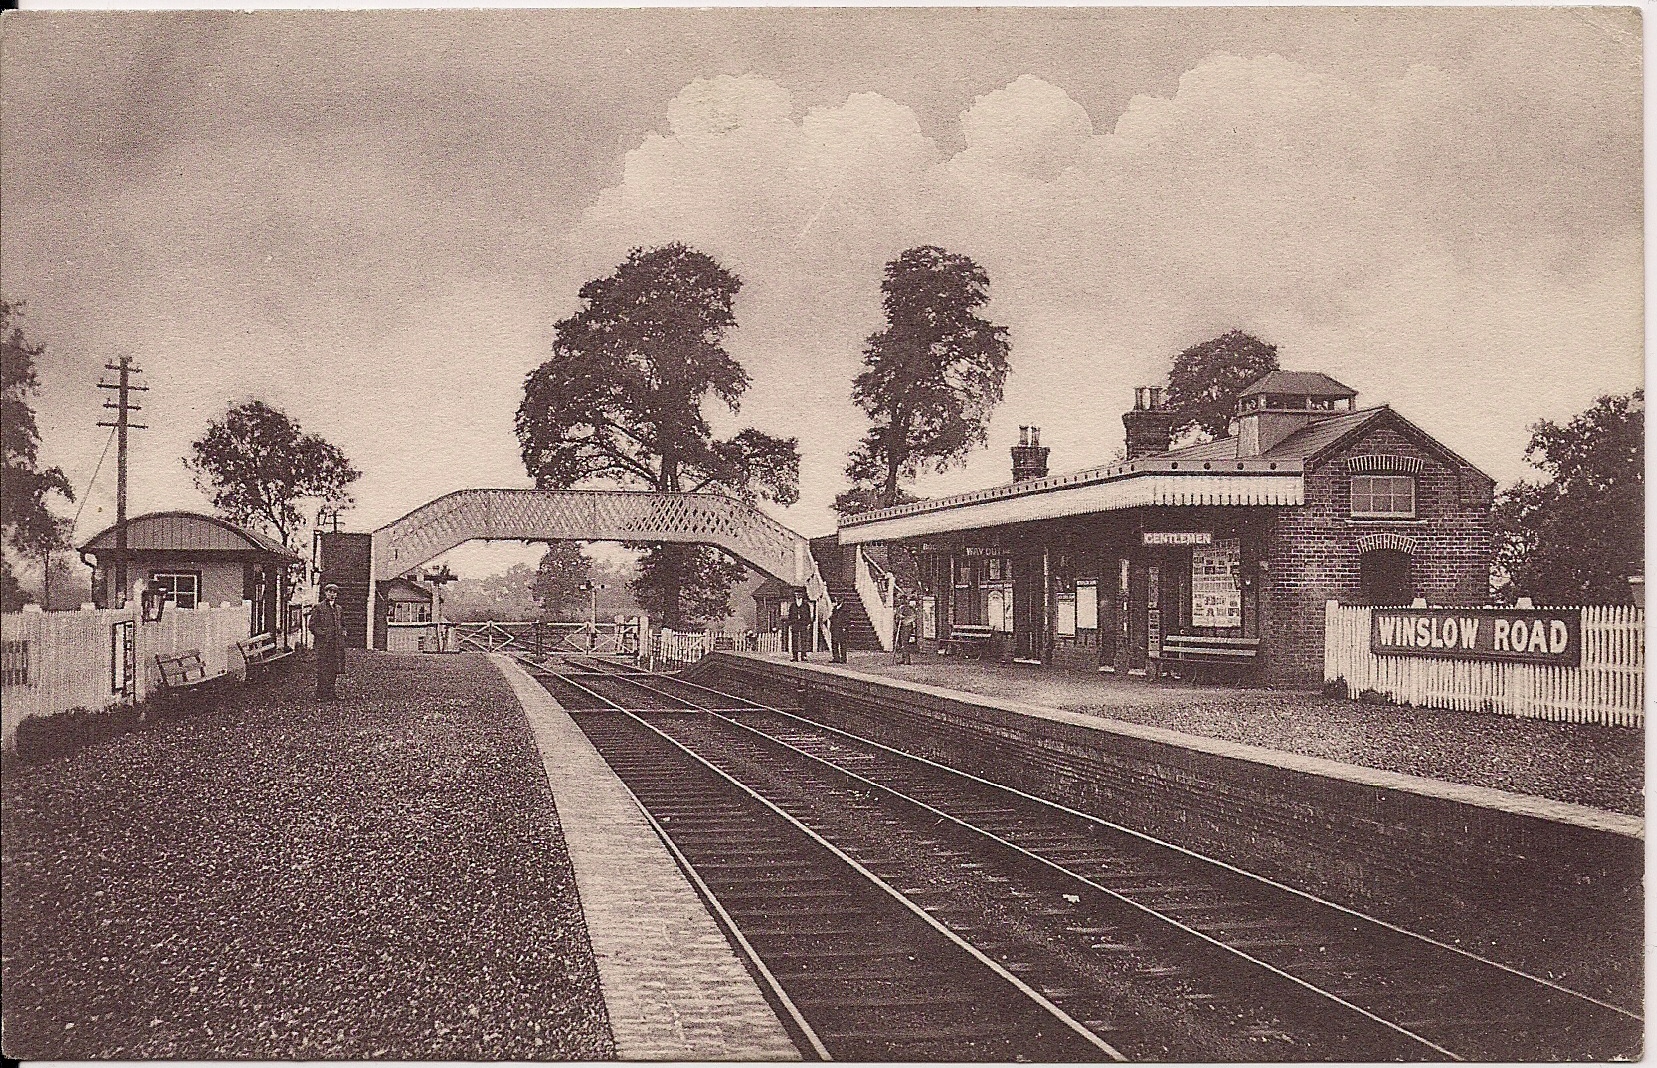 Winslow Road railway station